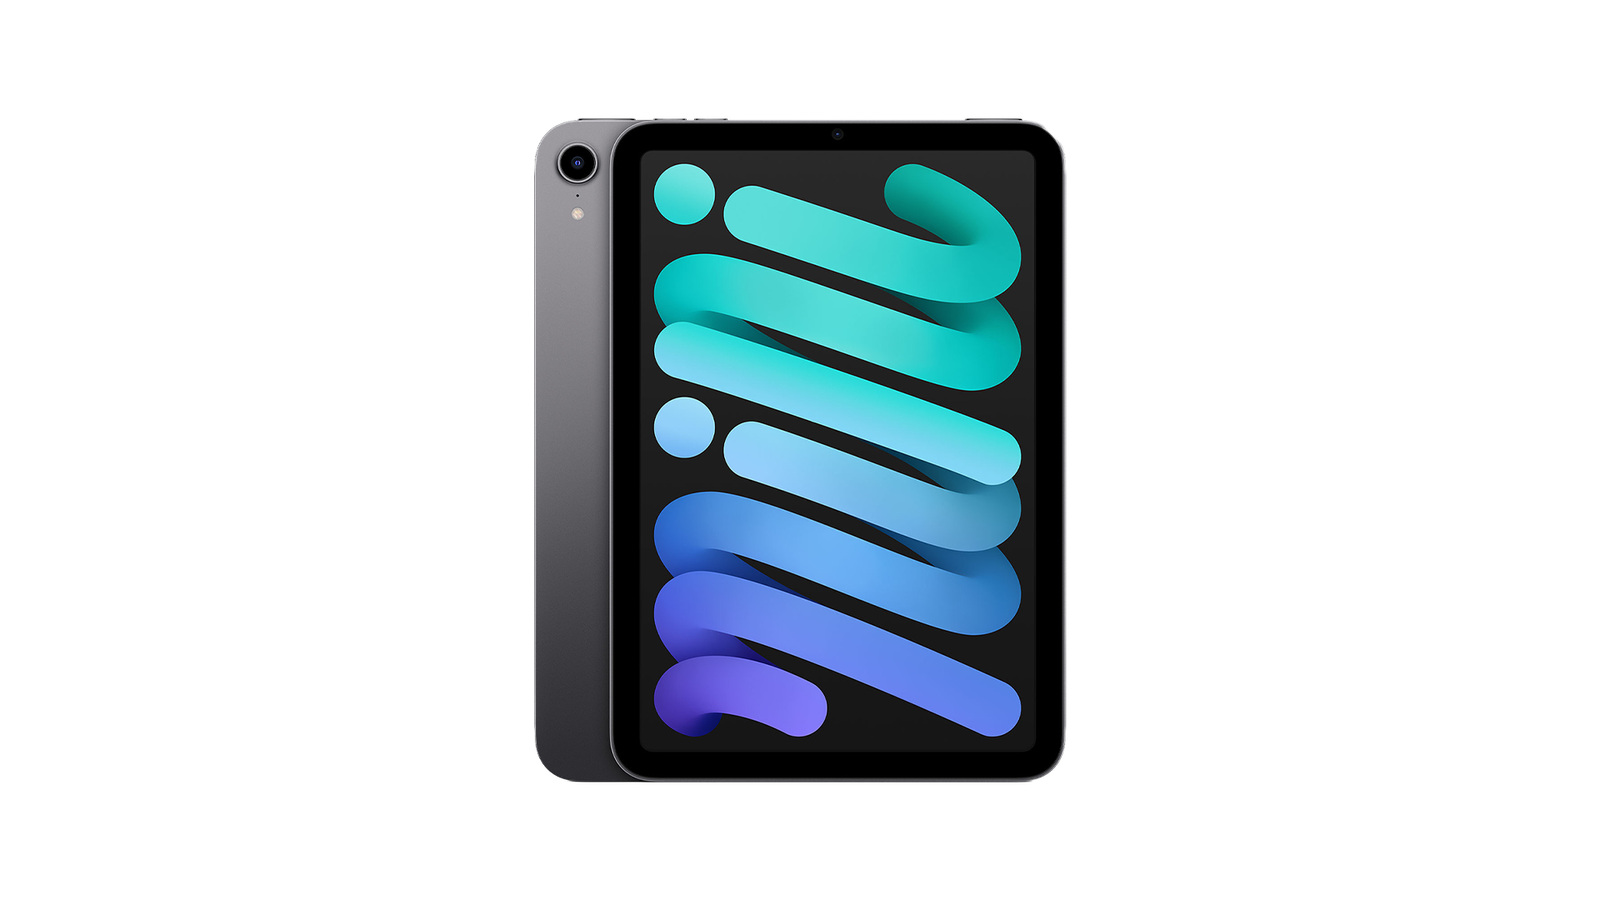 Apple iPad mini (2021) - The best iPad for graphic design for portability